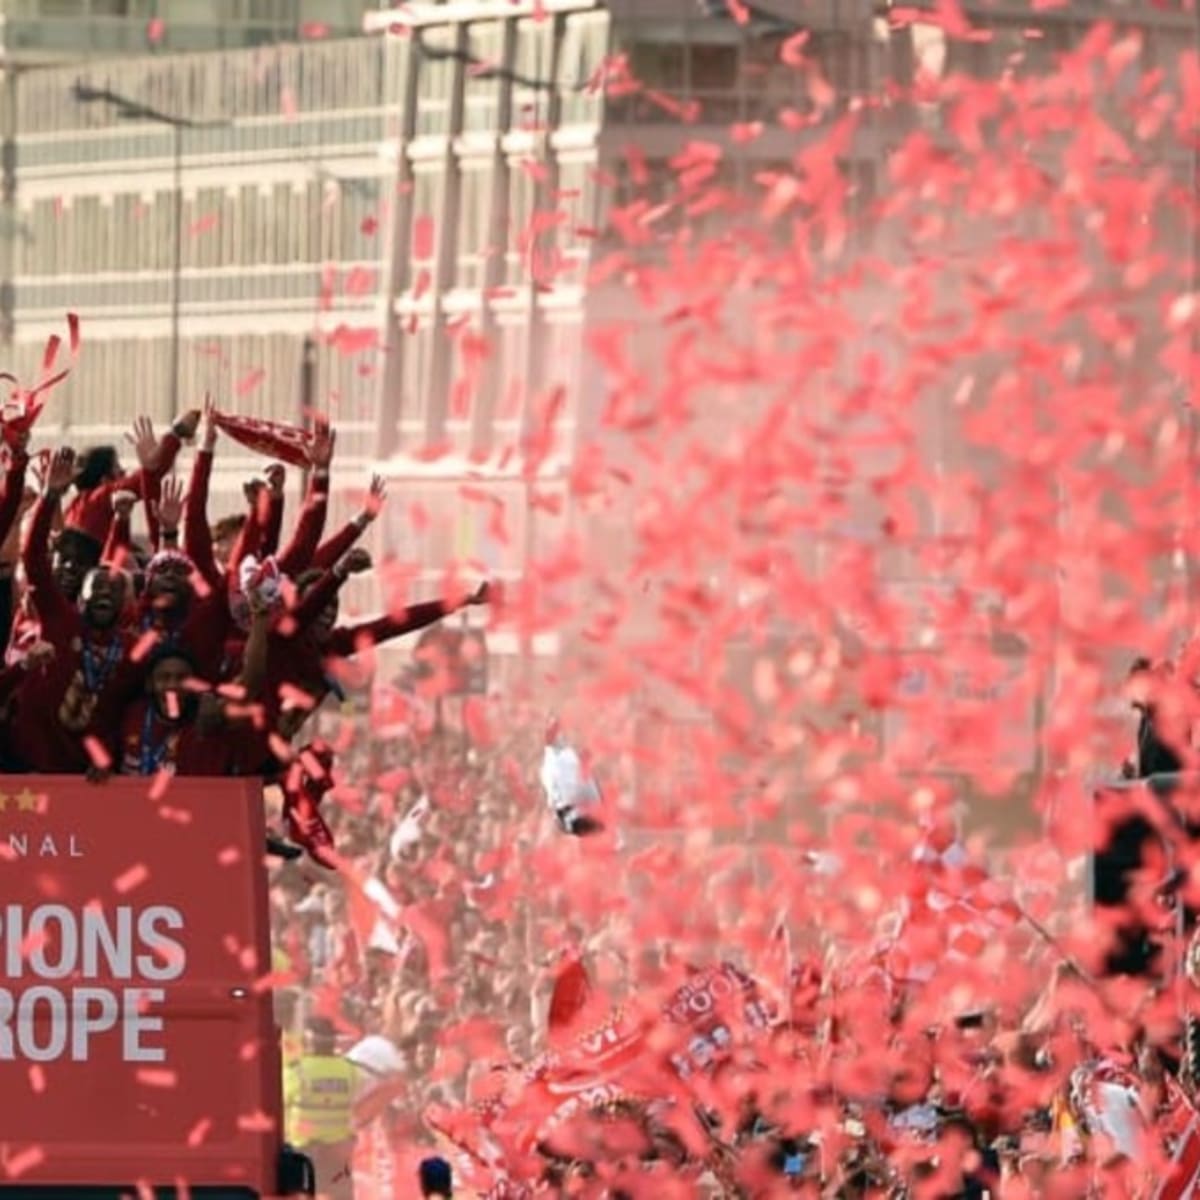 Liverpool Football Club Champions of Europe Season Review 2018-19